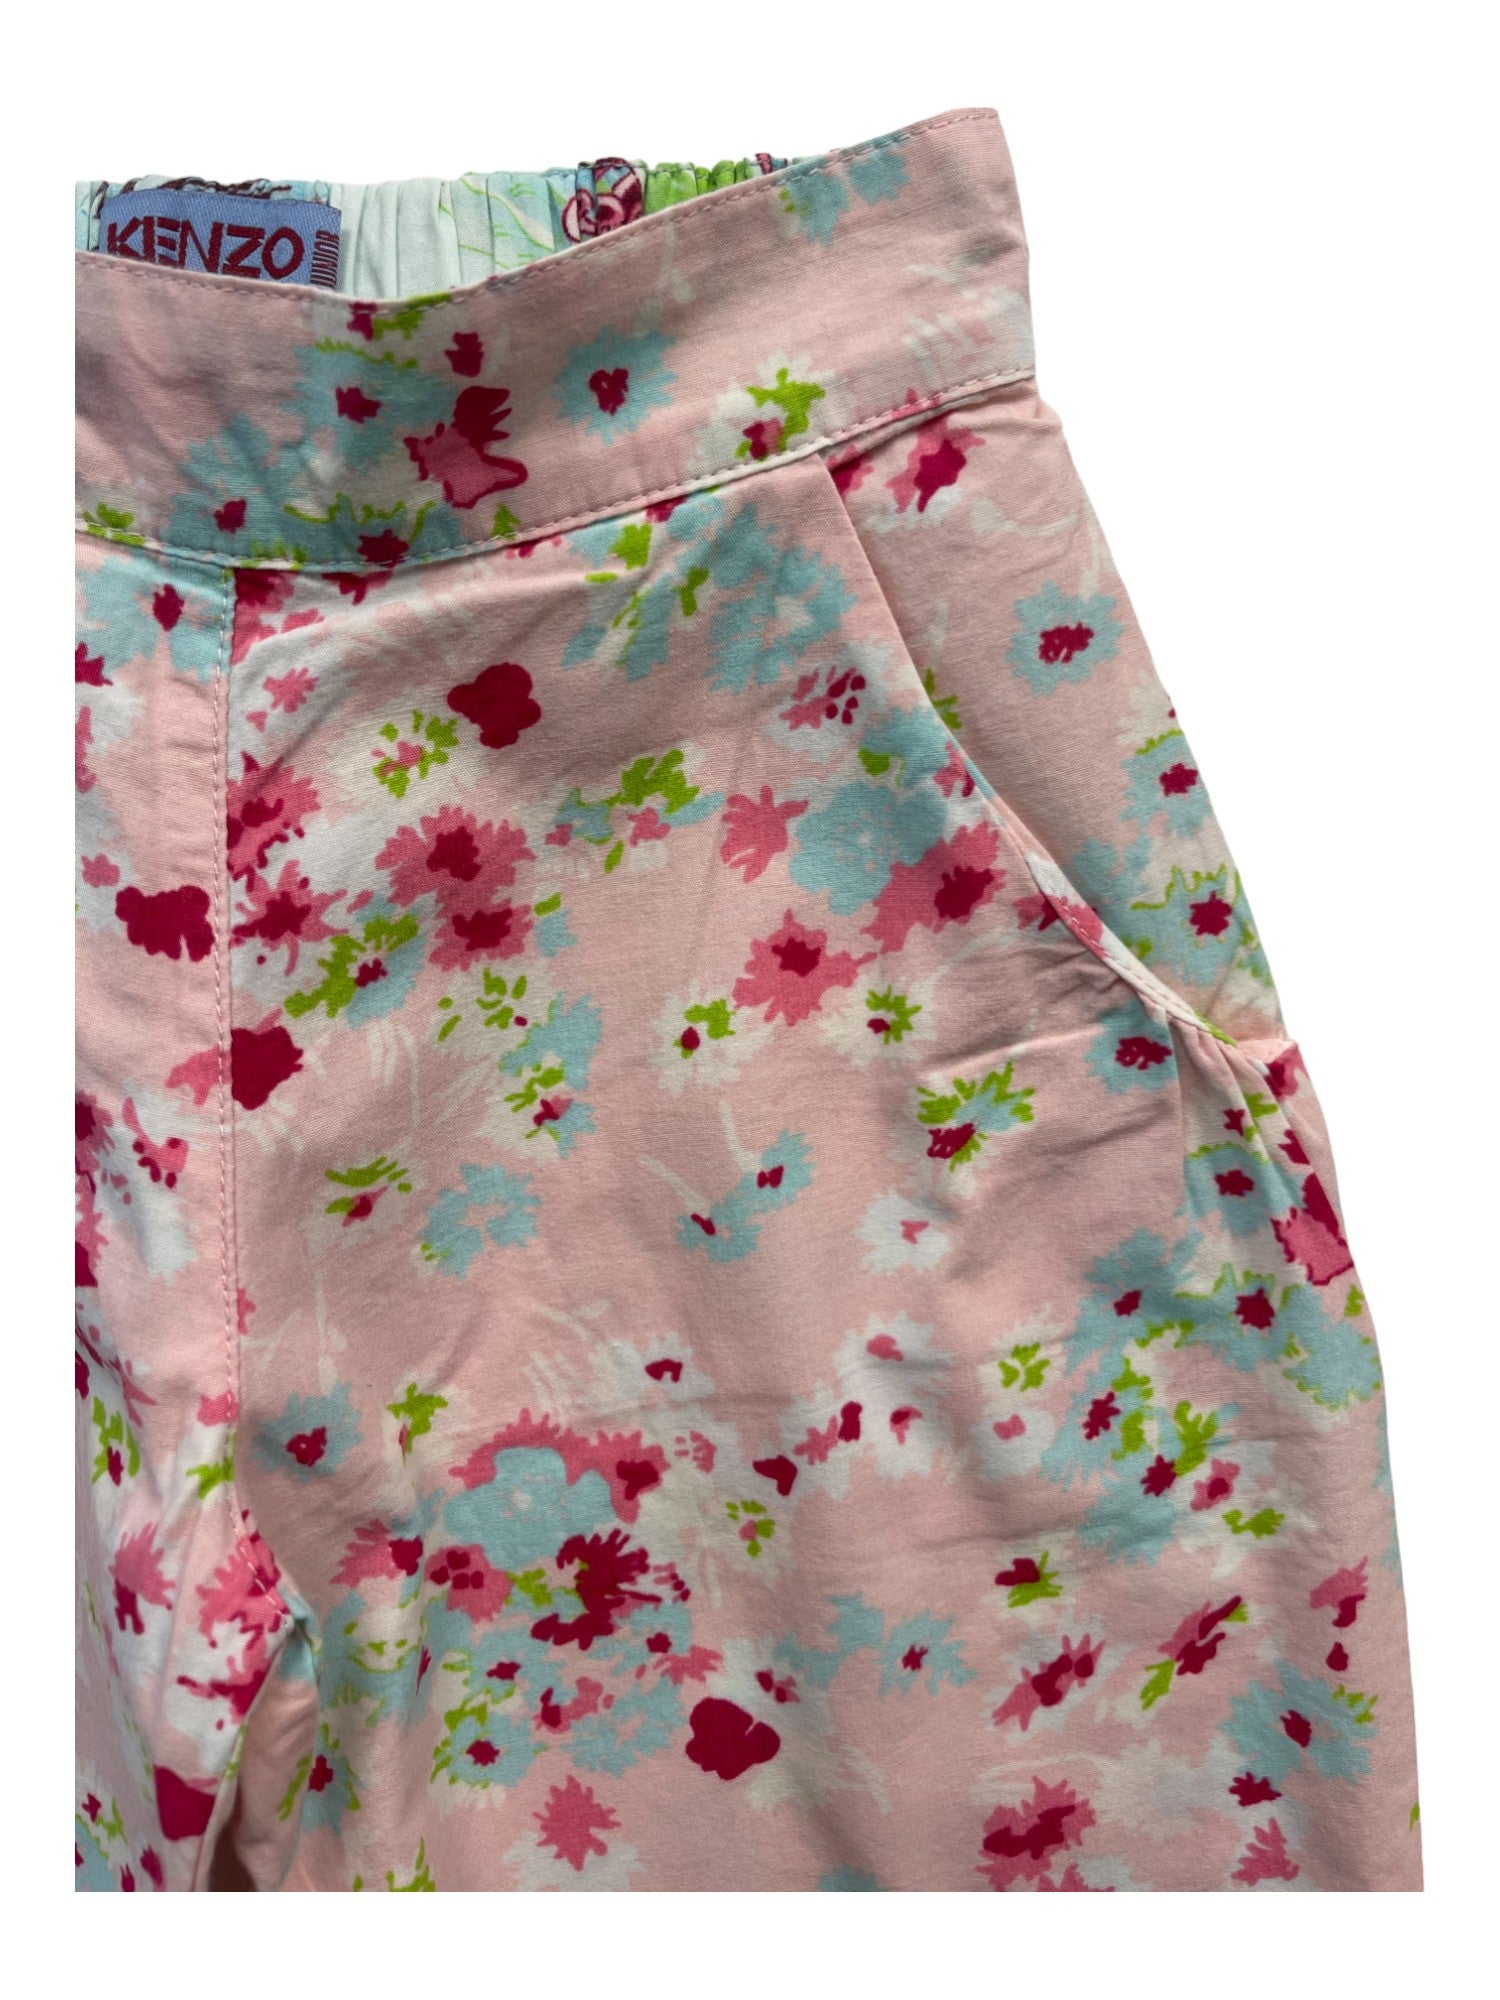 KENZO - Pantalon droit rose à fleurs - 2 ans